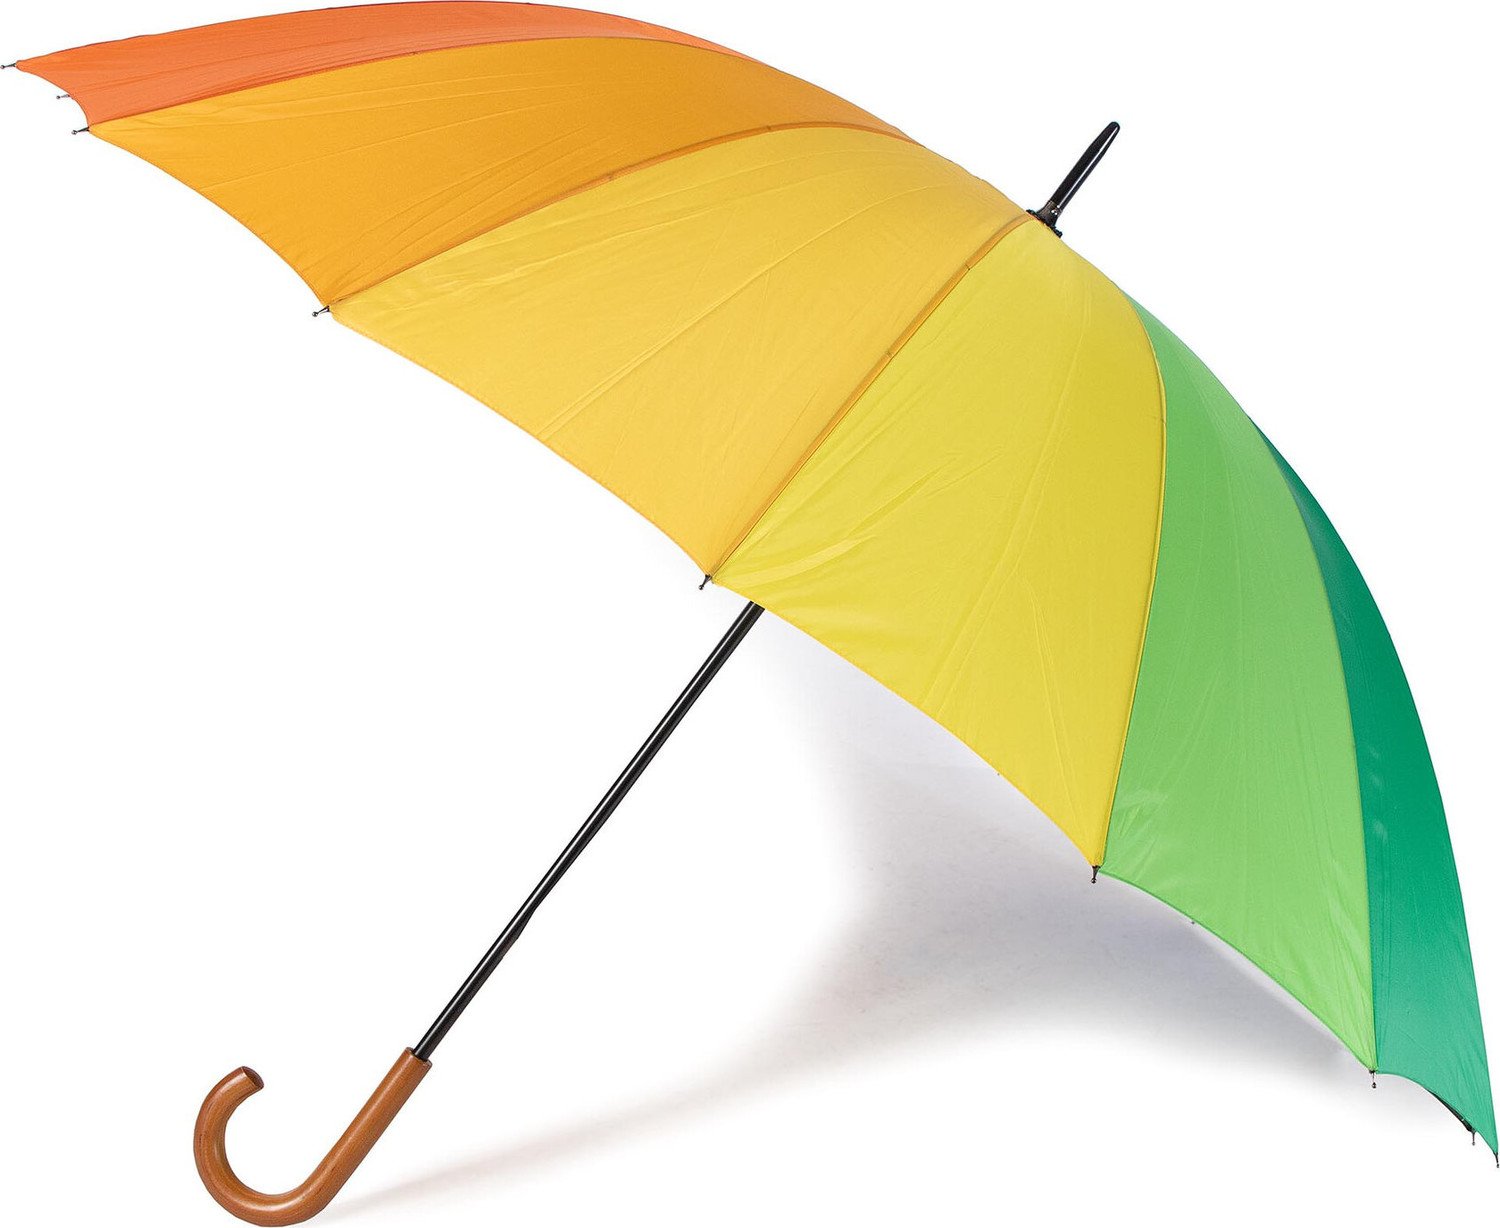 Deštník Happy Rain Golf 75/16 Rh 44852 Barevná